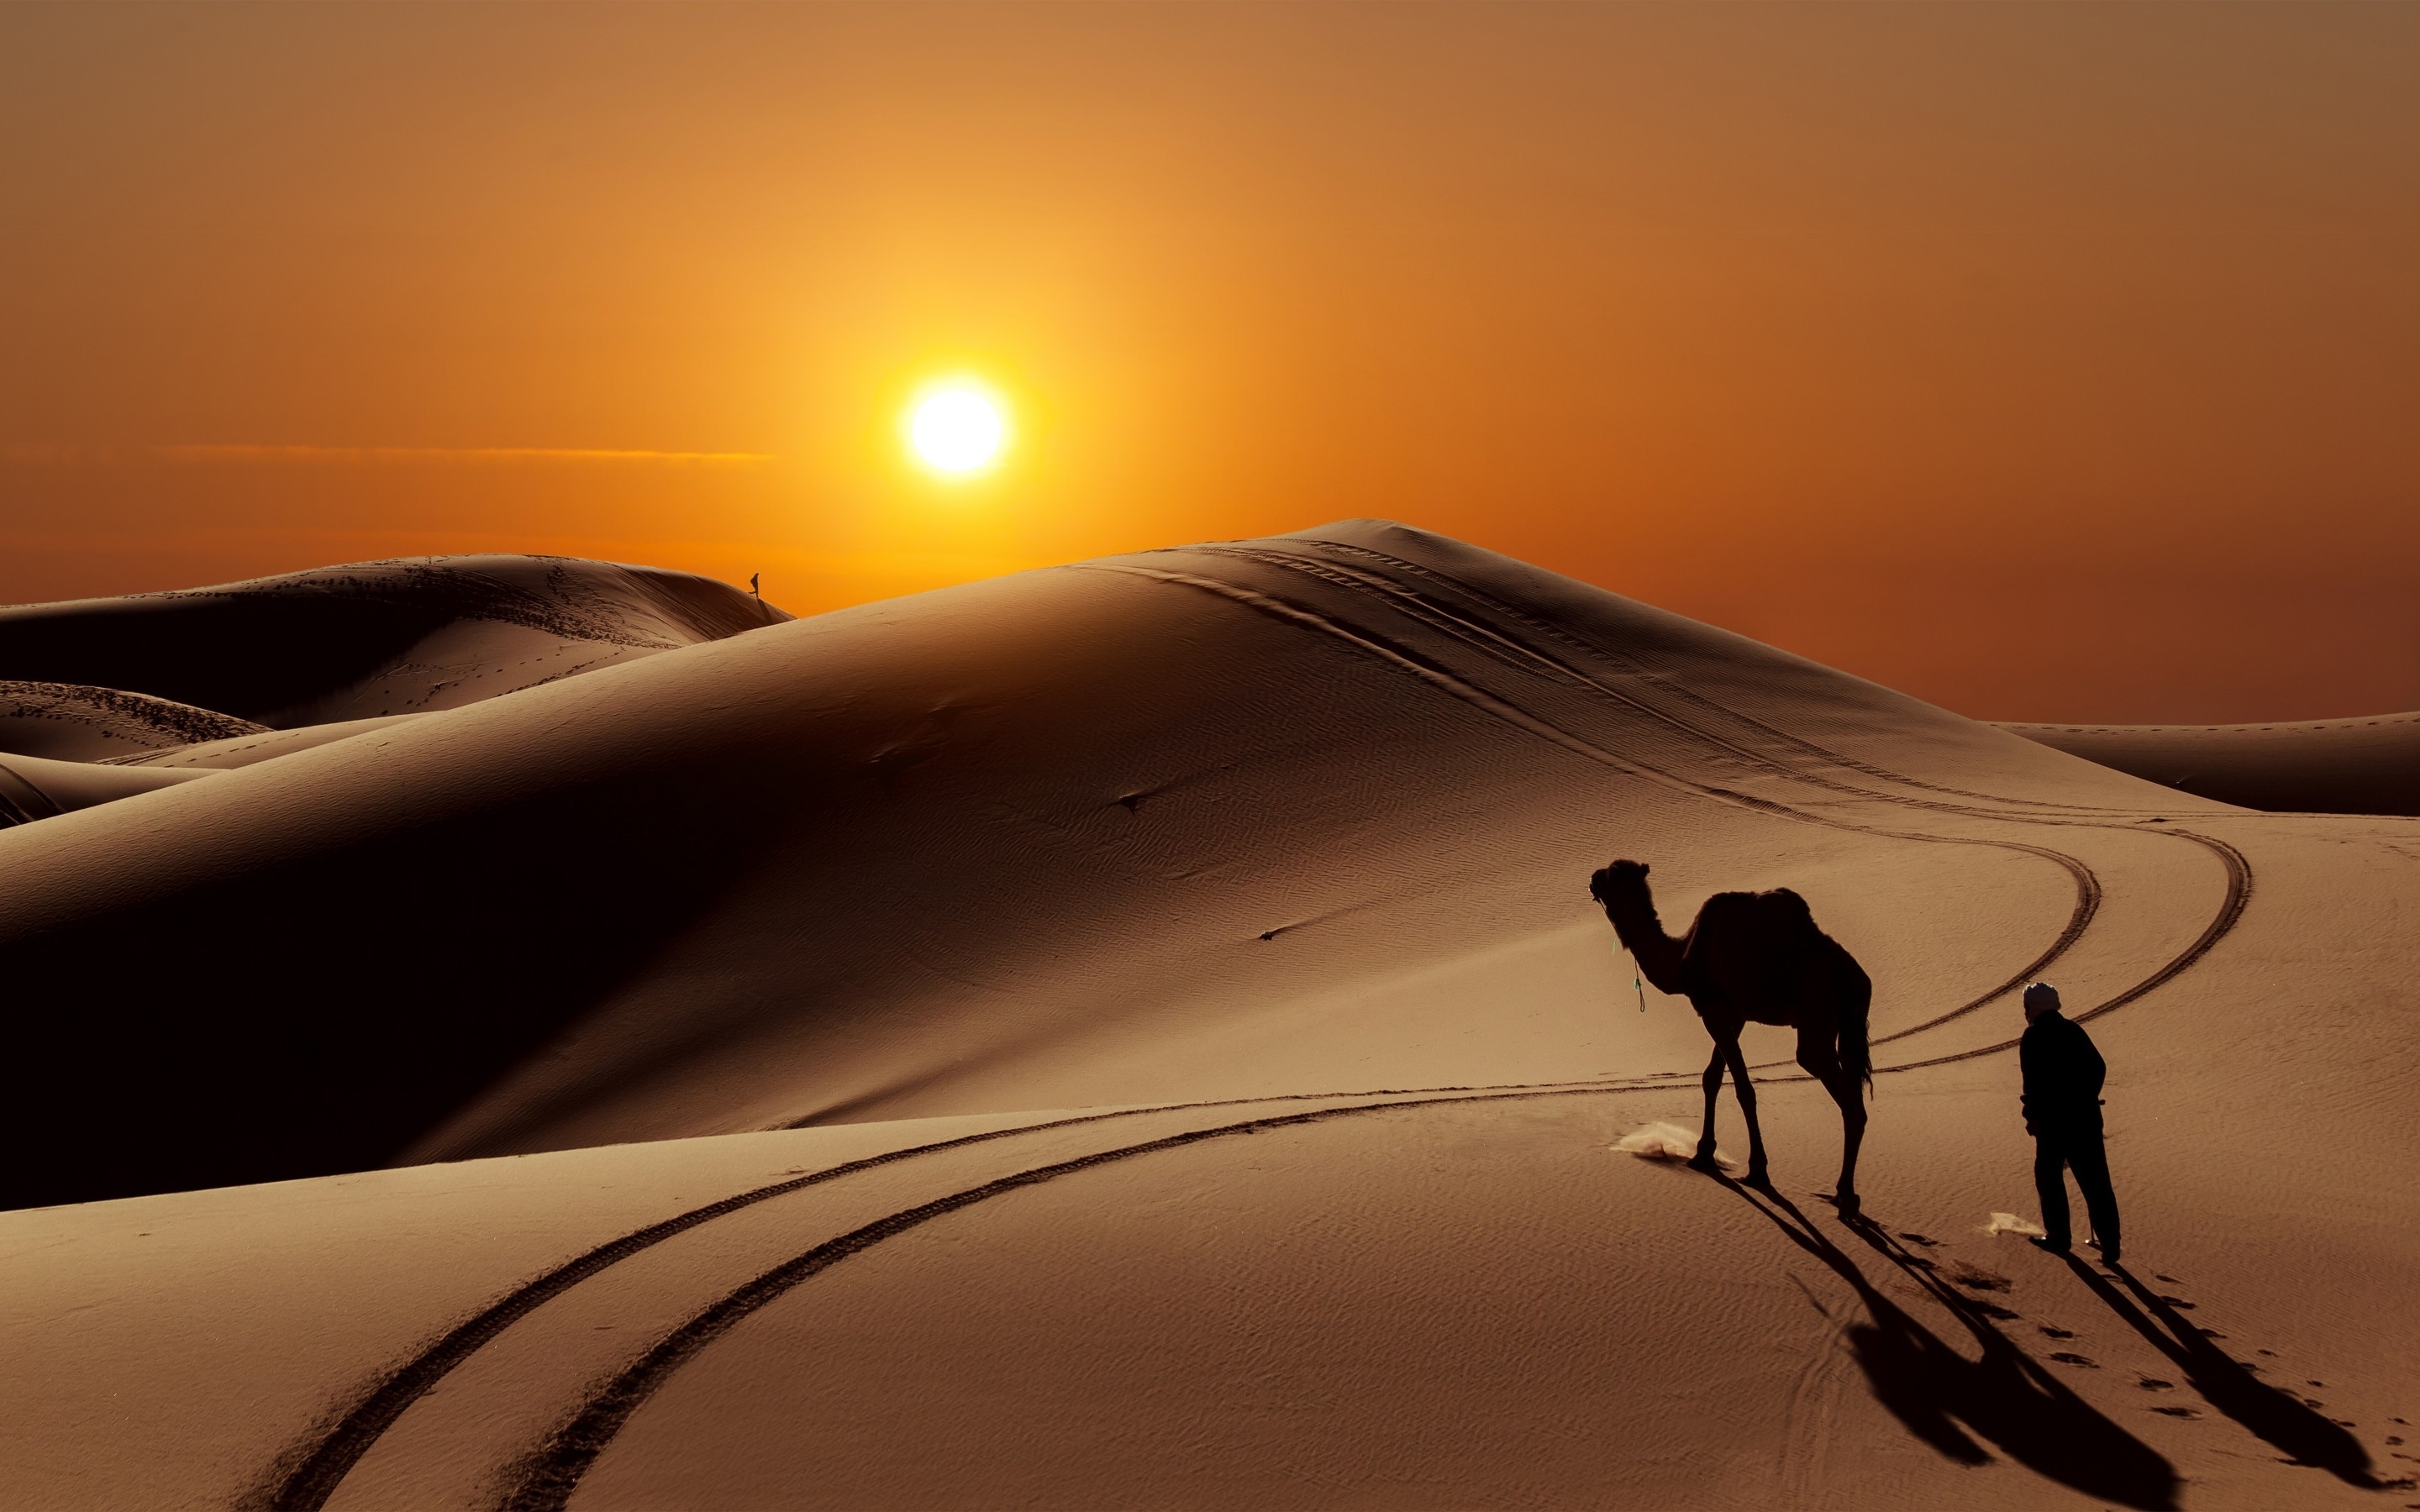 Sunset in Desert for 2880 x 1800 Retina Display resolution